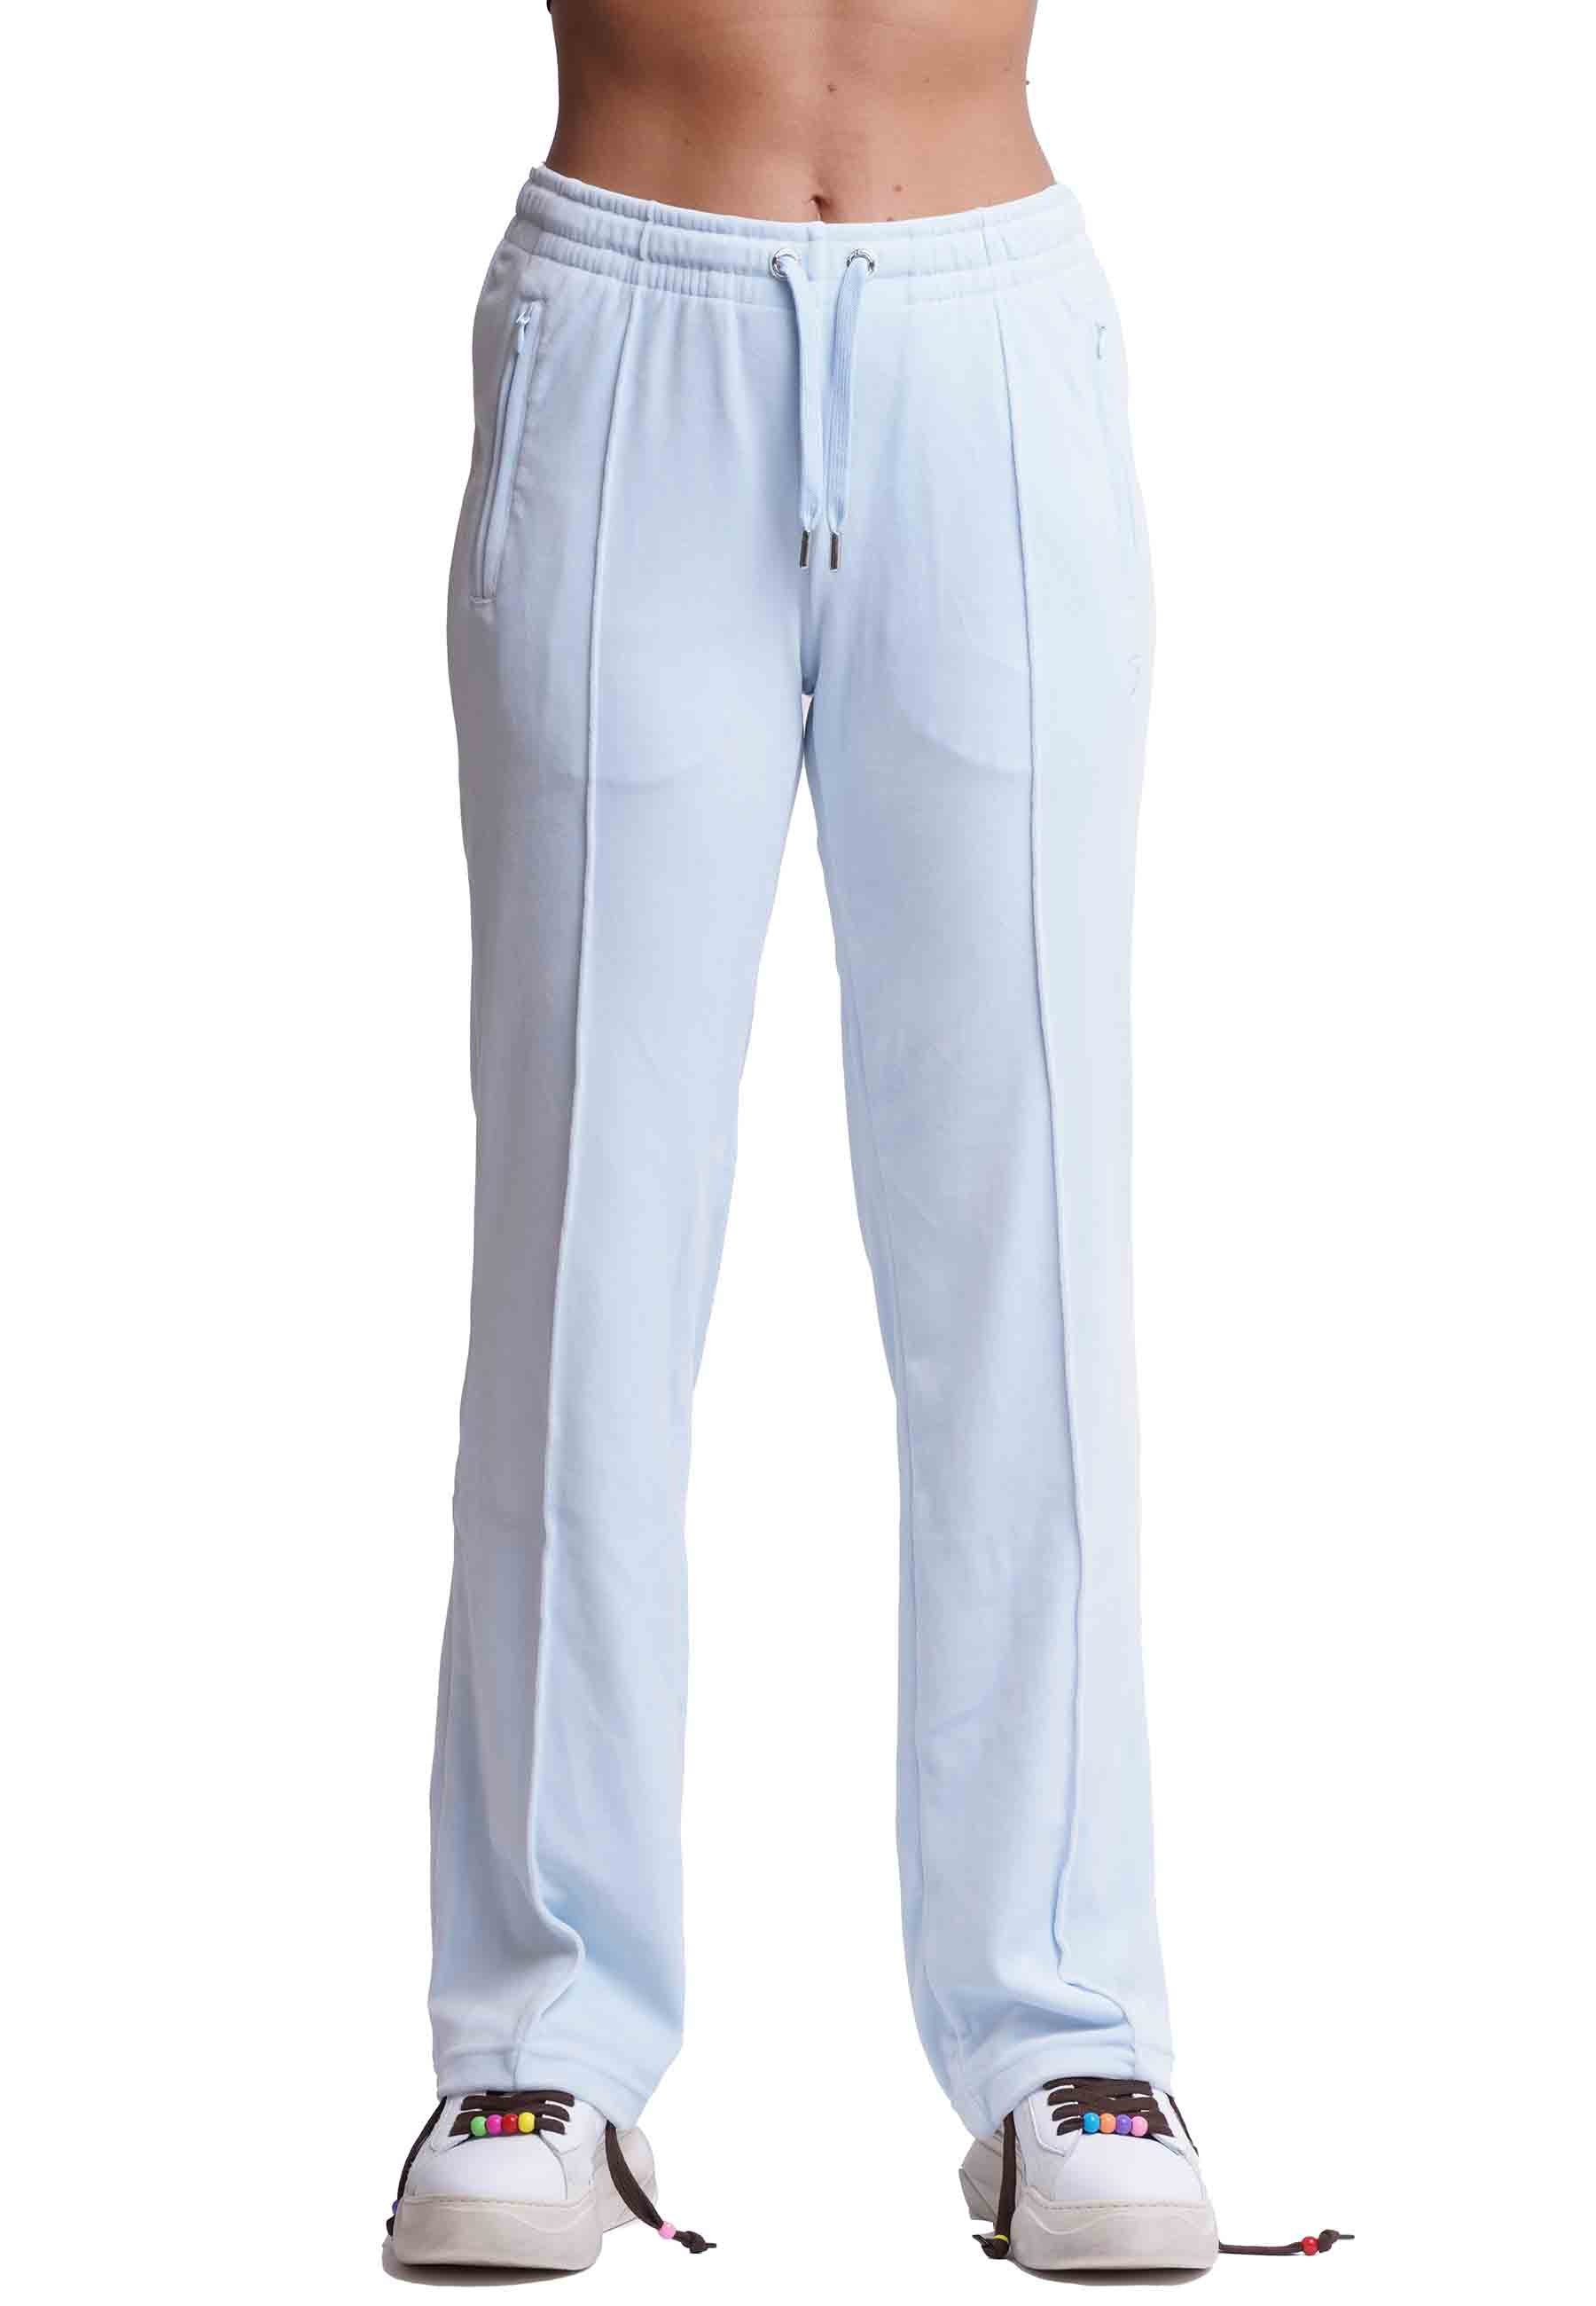 Pantalon femme Diamond en velours bleu clair avec strass